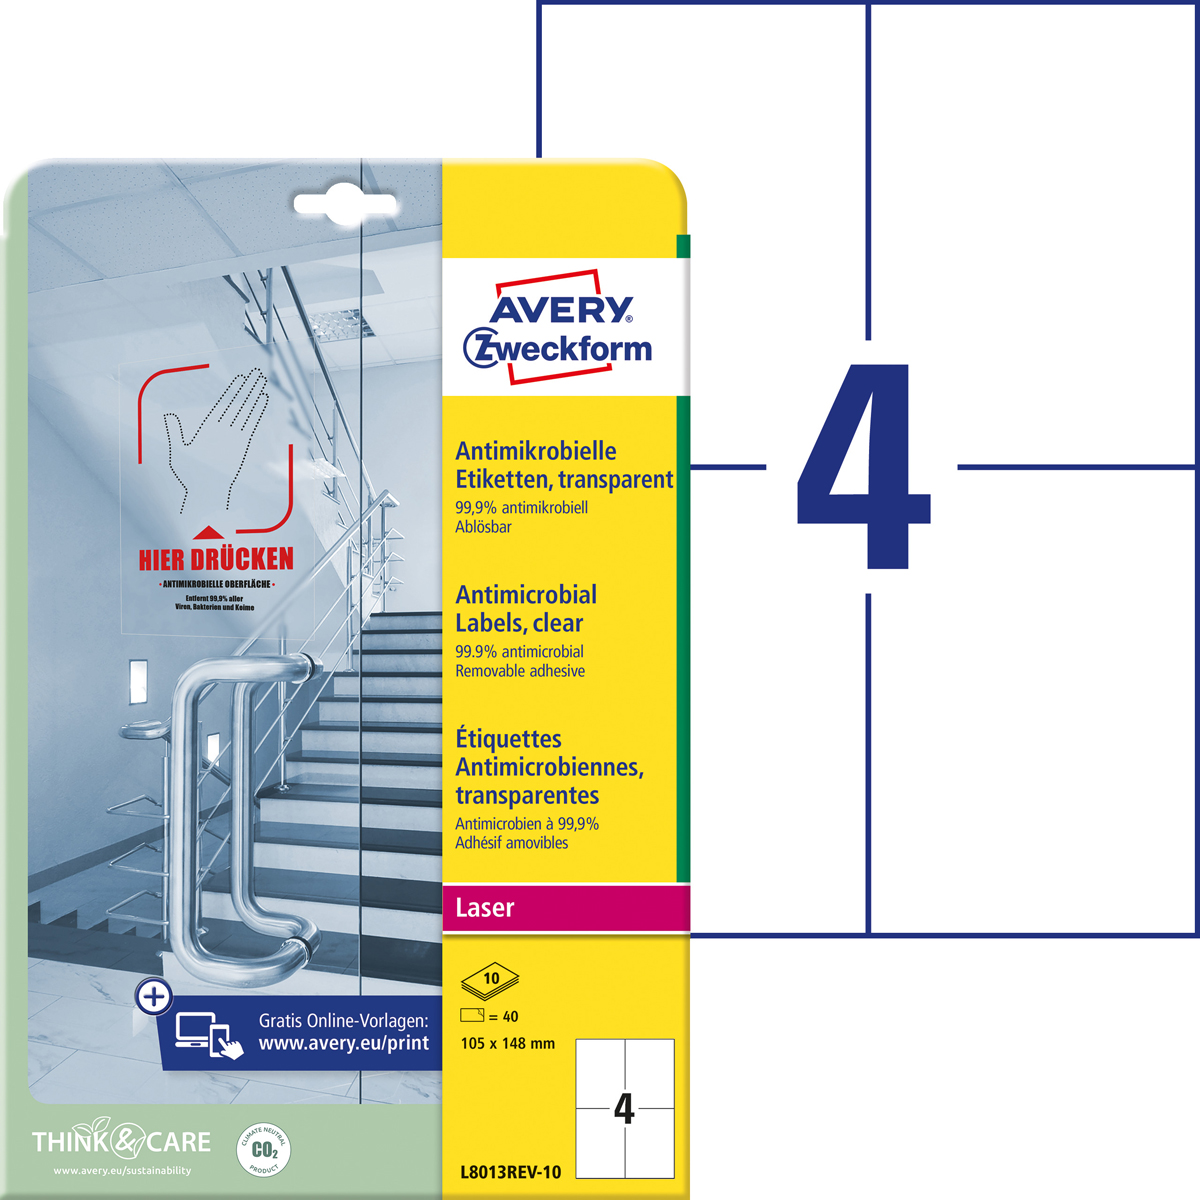 Avery ZweckformL8013REV-10 Antimikrobielle Etiketten, 105x148 mm, 10 Bogen/40 Etiketten, ablösbar trans.